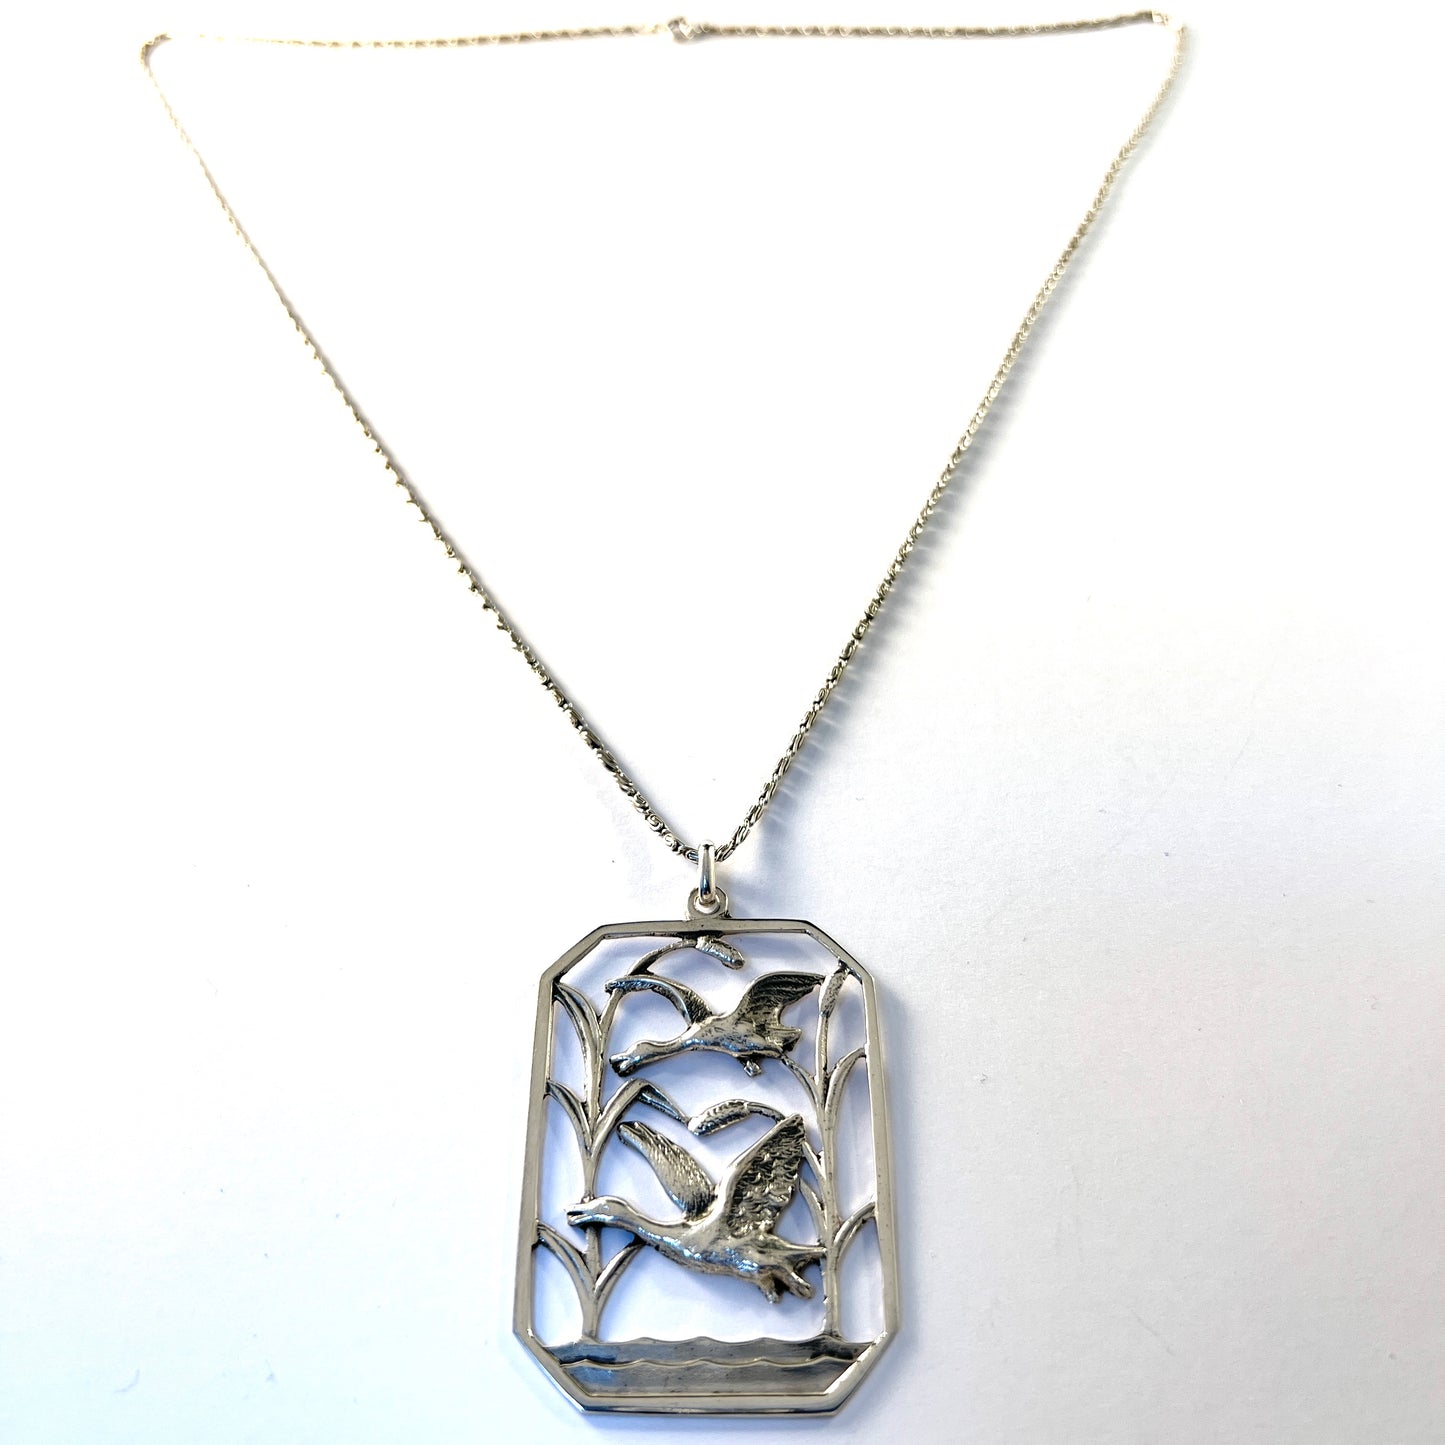 Sigfred Pedersen, Denmark 1940s. Large Solid Silver Pendant Necklace.